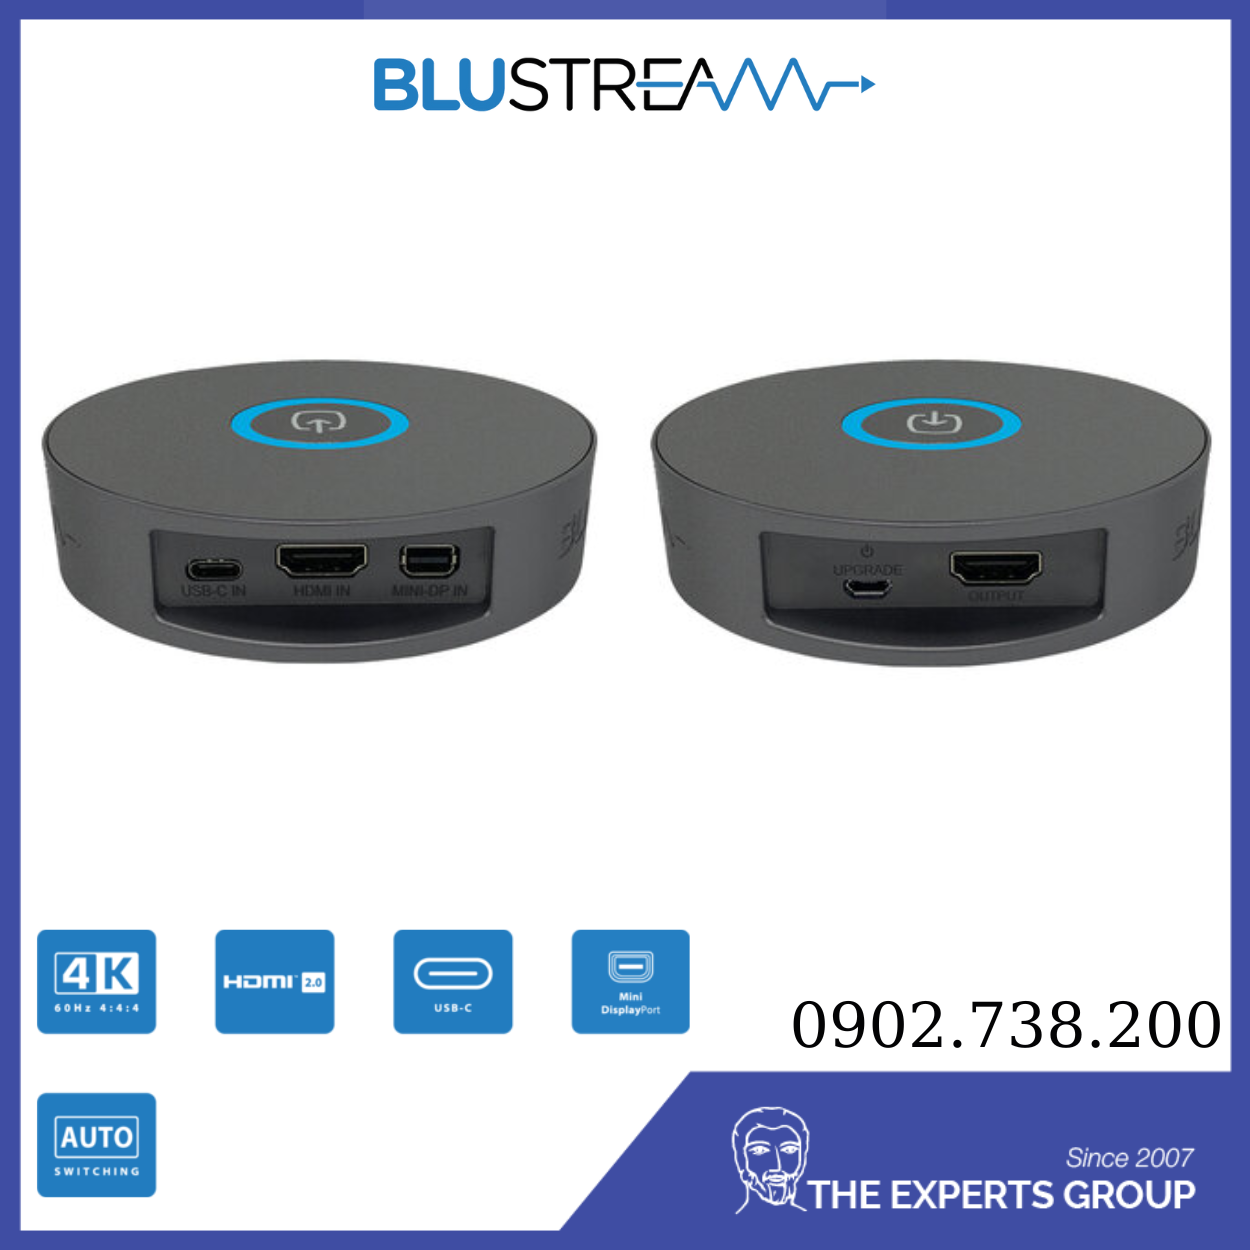 Blustream Portable Multi-Format Presentation Switch